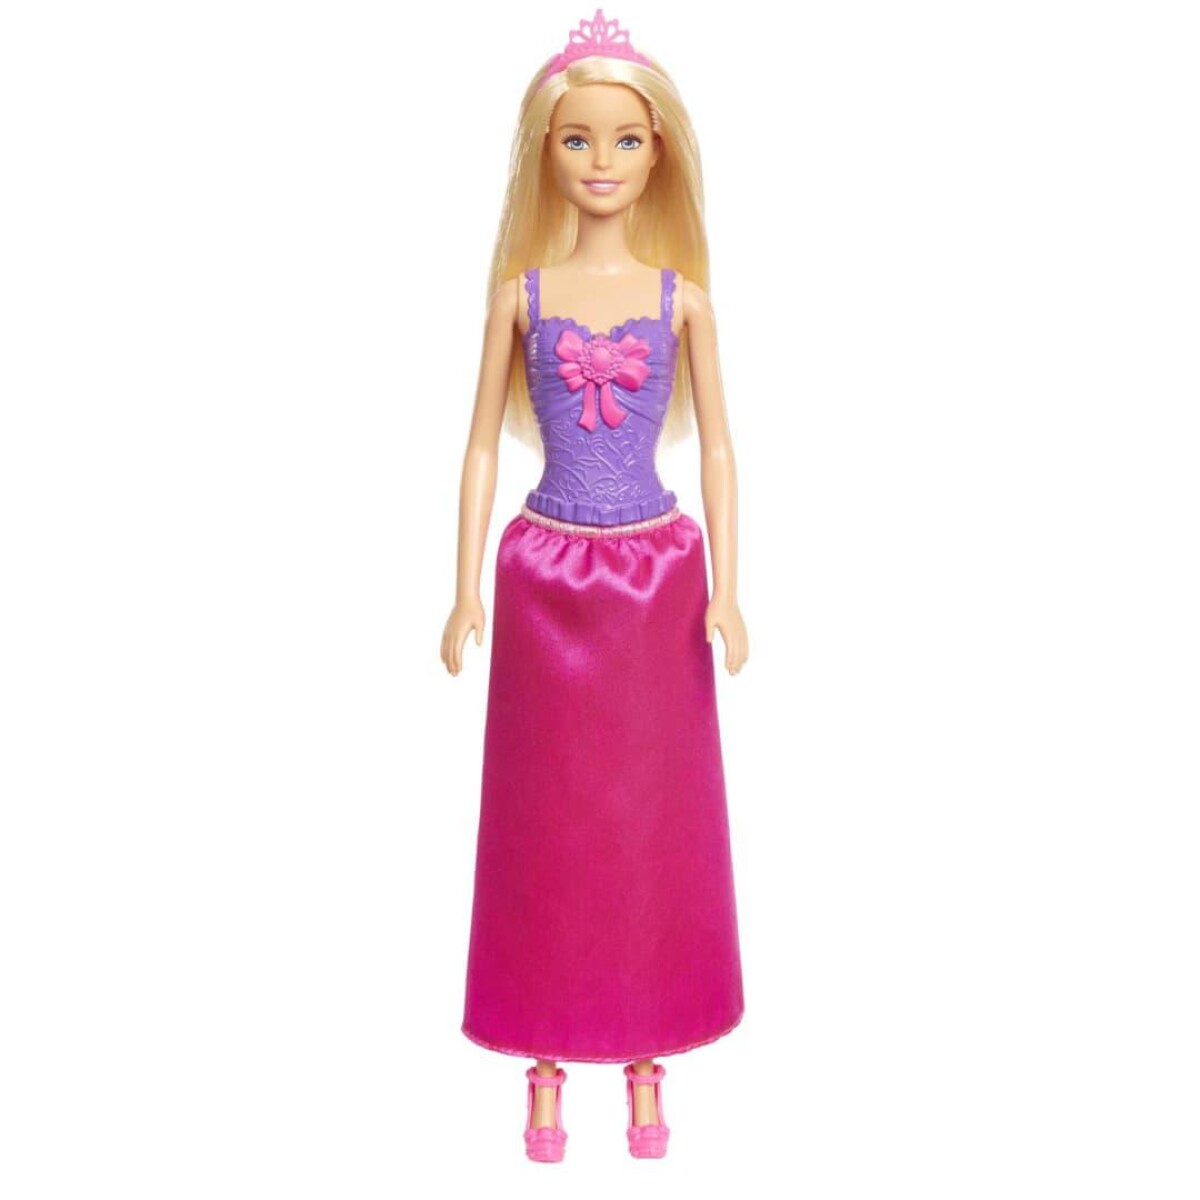 Barbie Princesa Vestido Rosa 